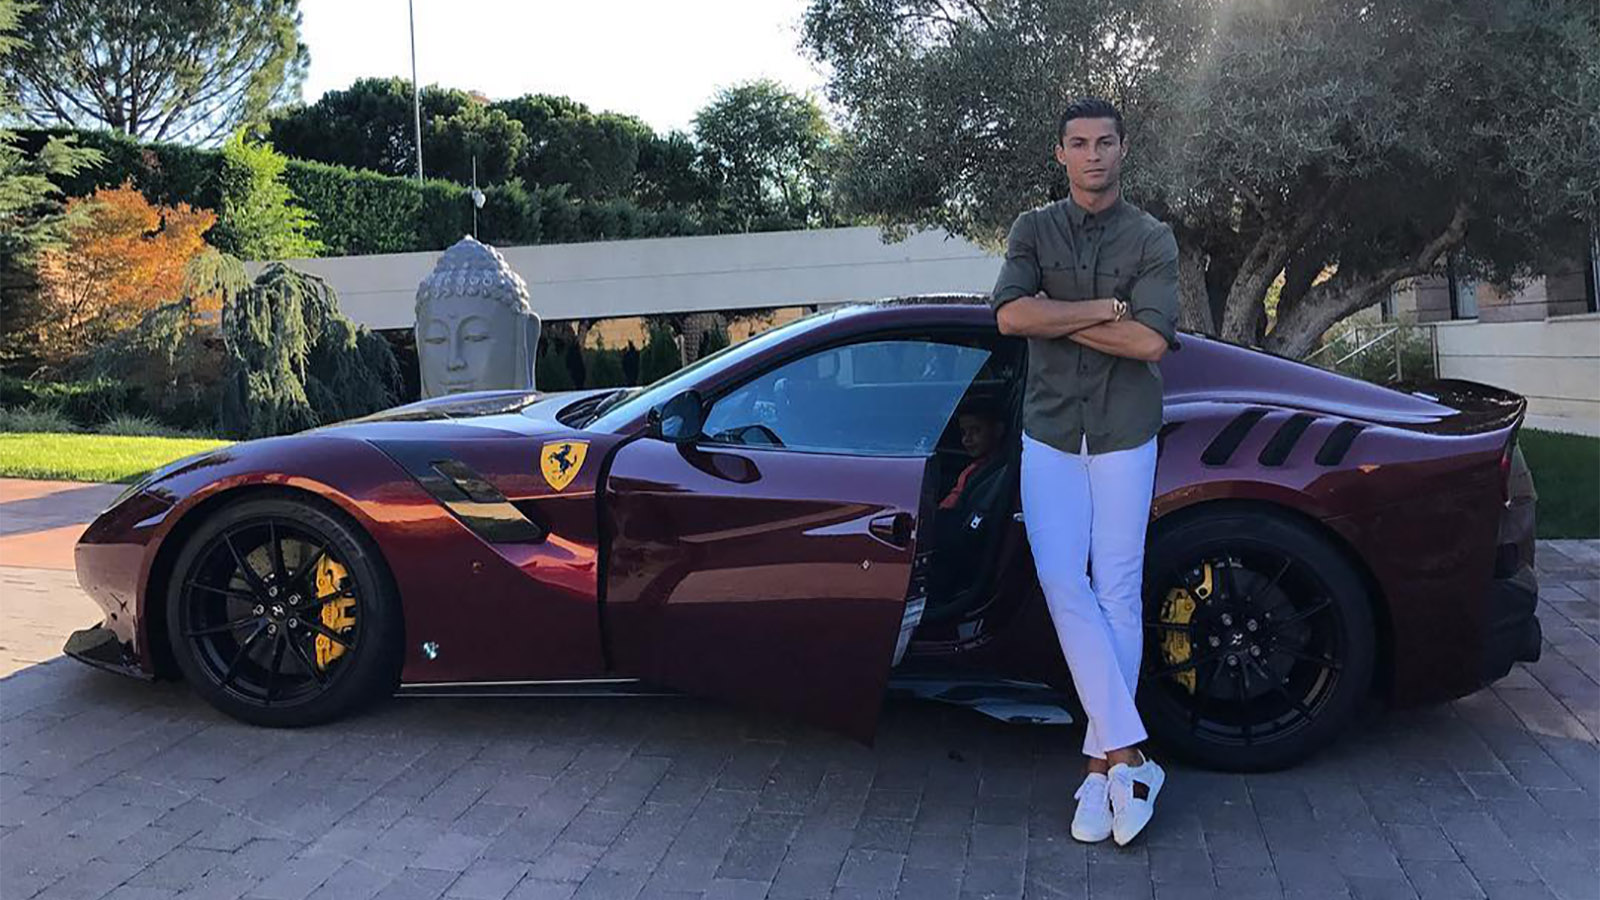 Cristiano Ronaldo's insane supercar collection will blow you away